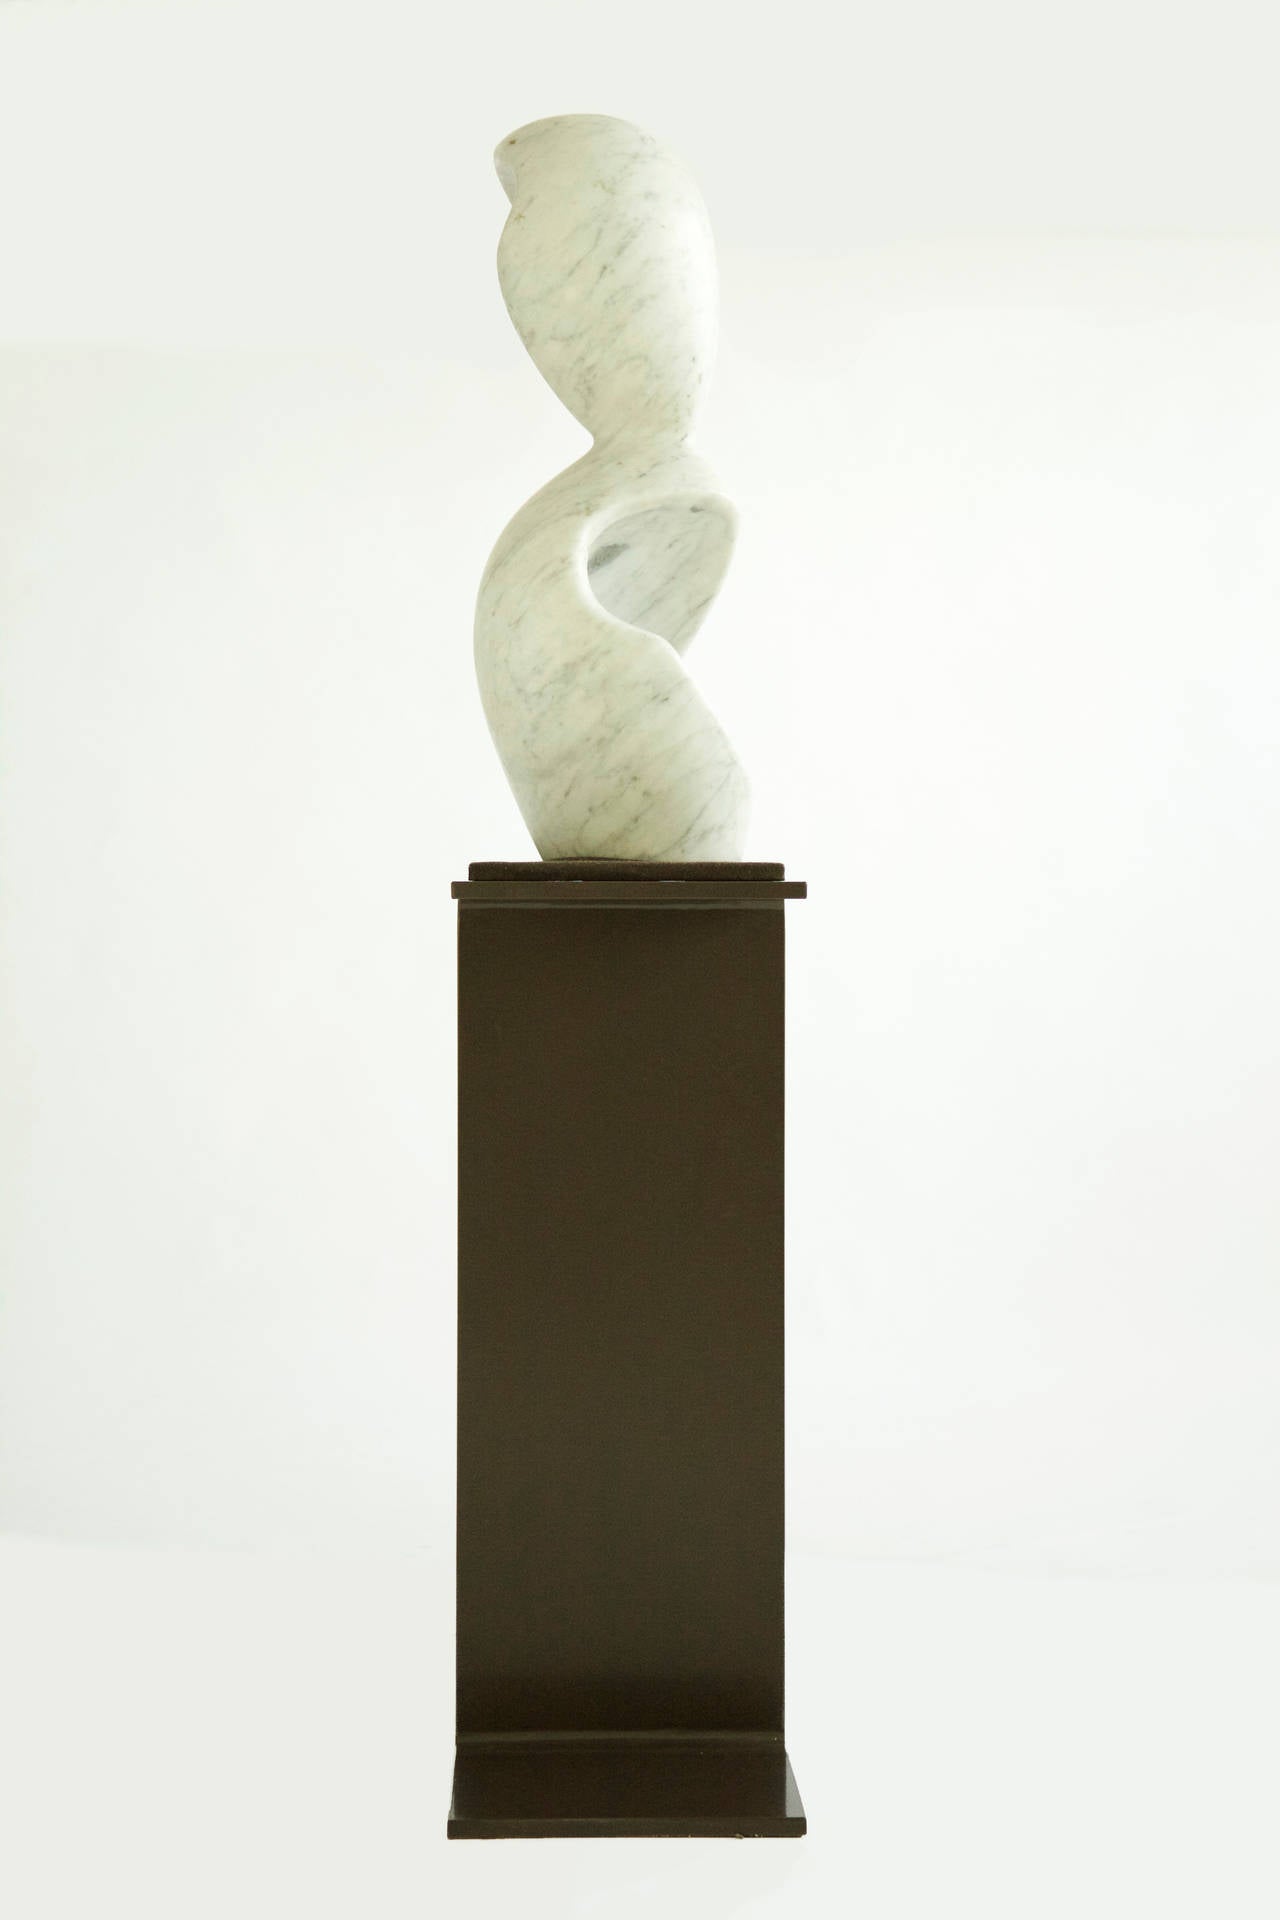 Industrial Robert Kleinschmidt I-Beam Display Pedestal